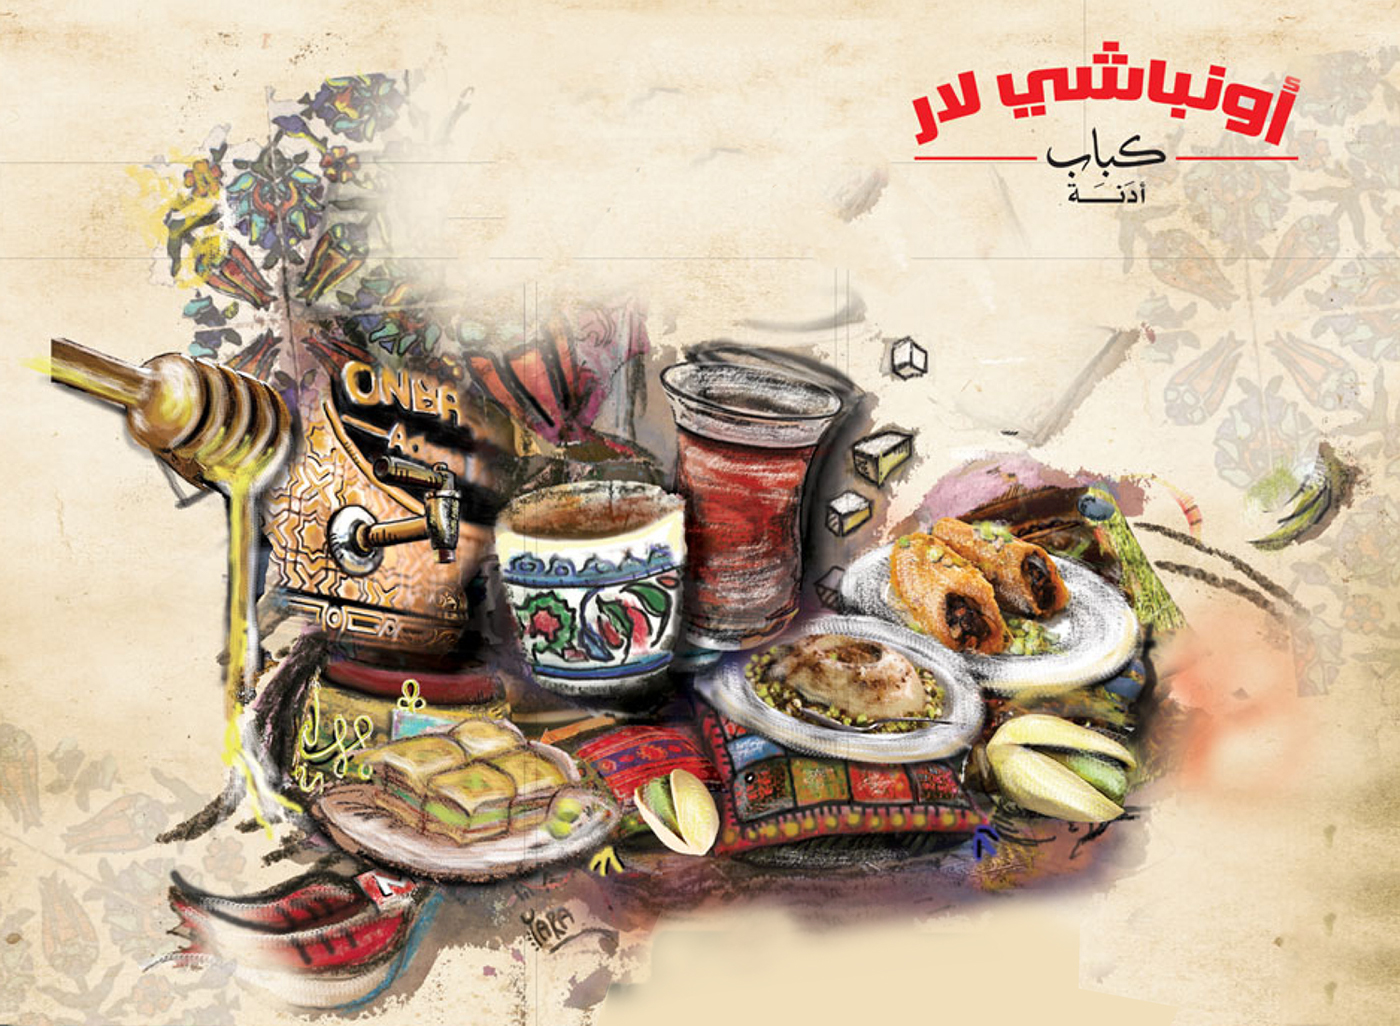 onbasilar kebap adana Turkey turkish restaurant menu branding  Paintings collage